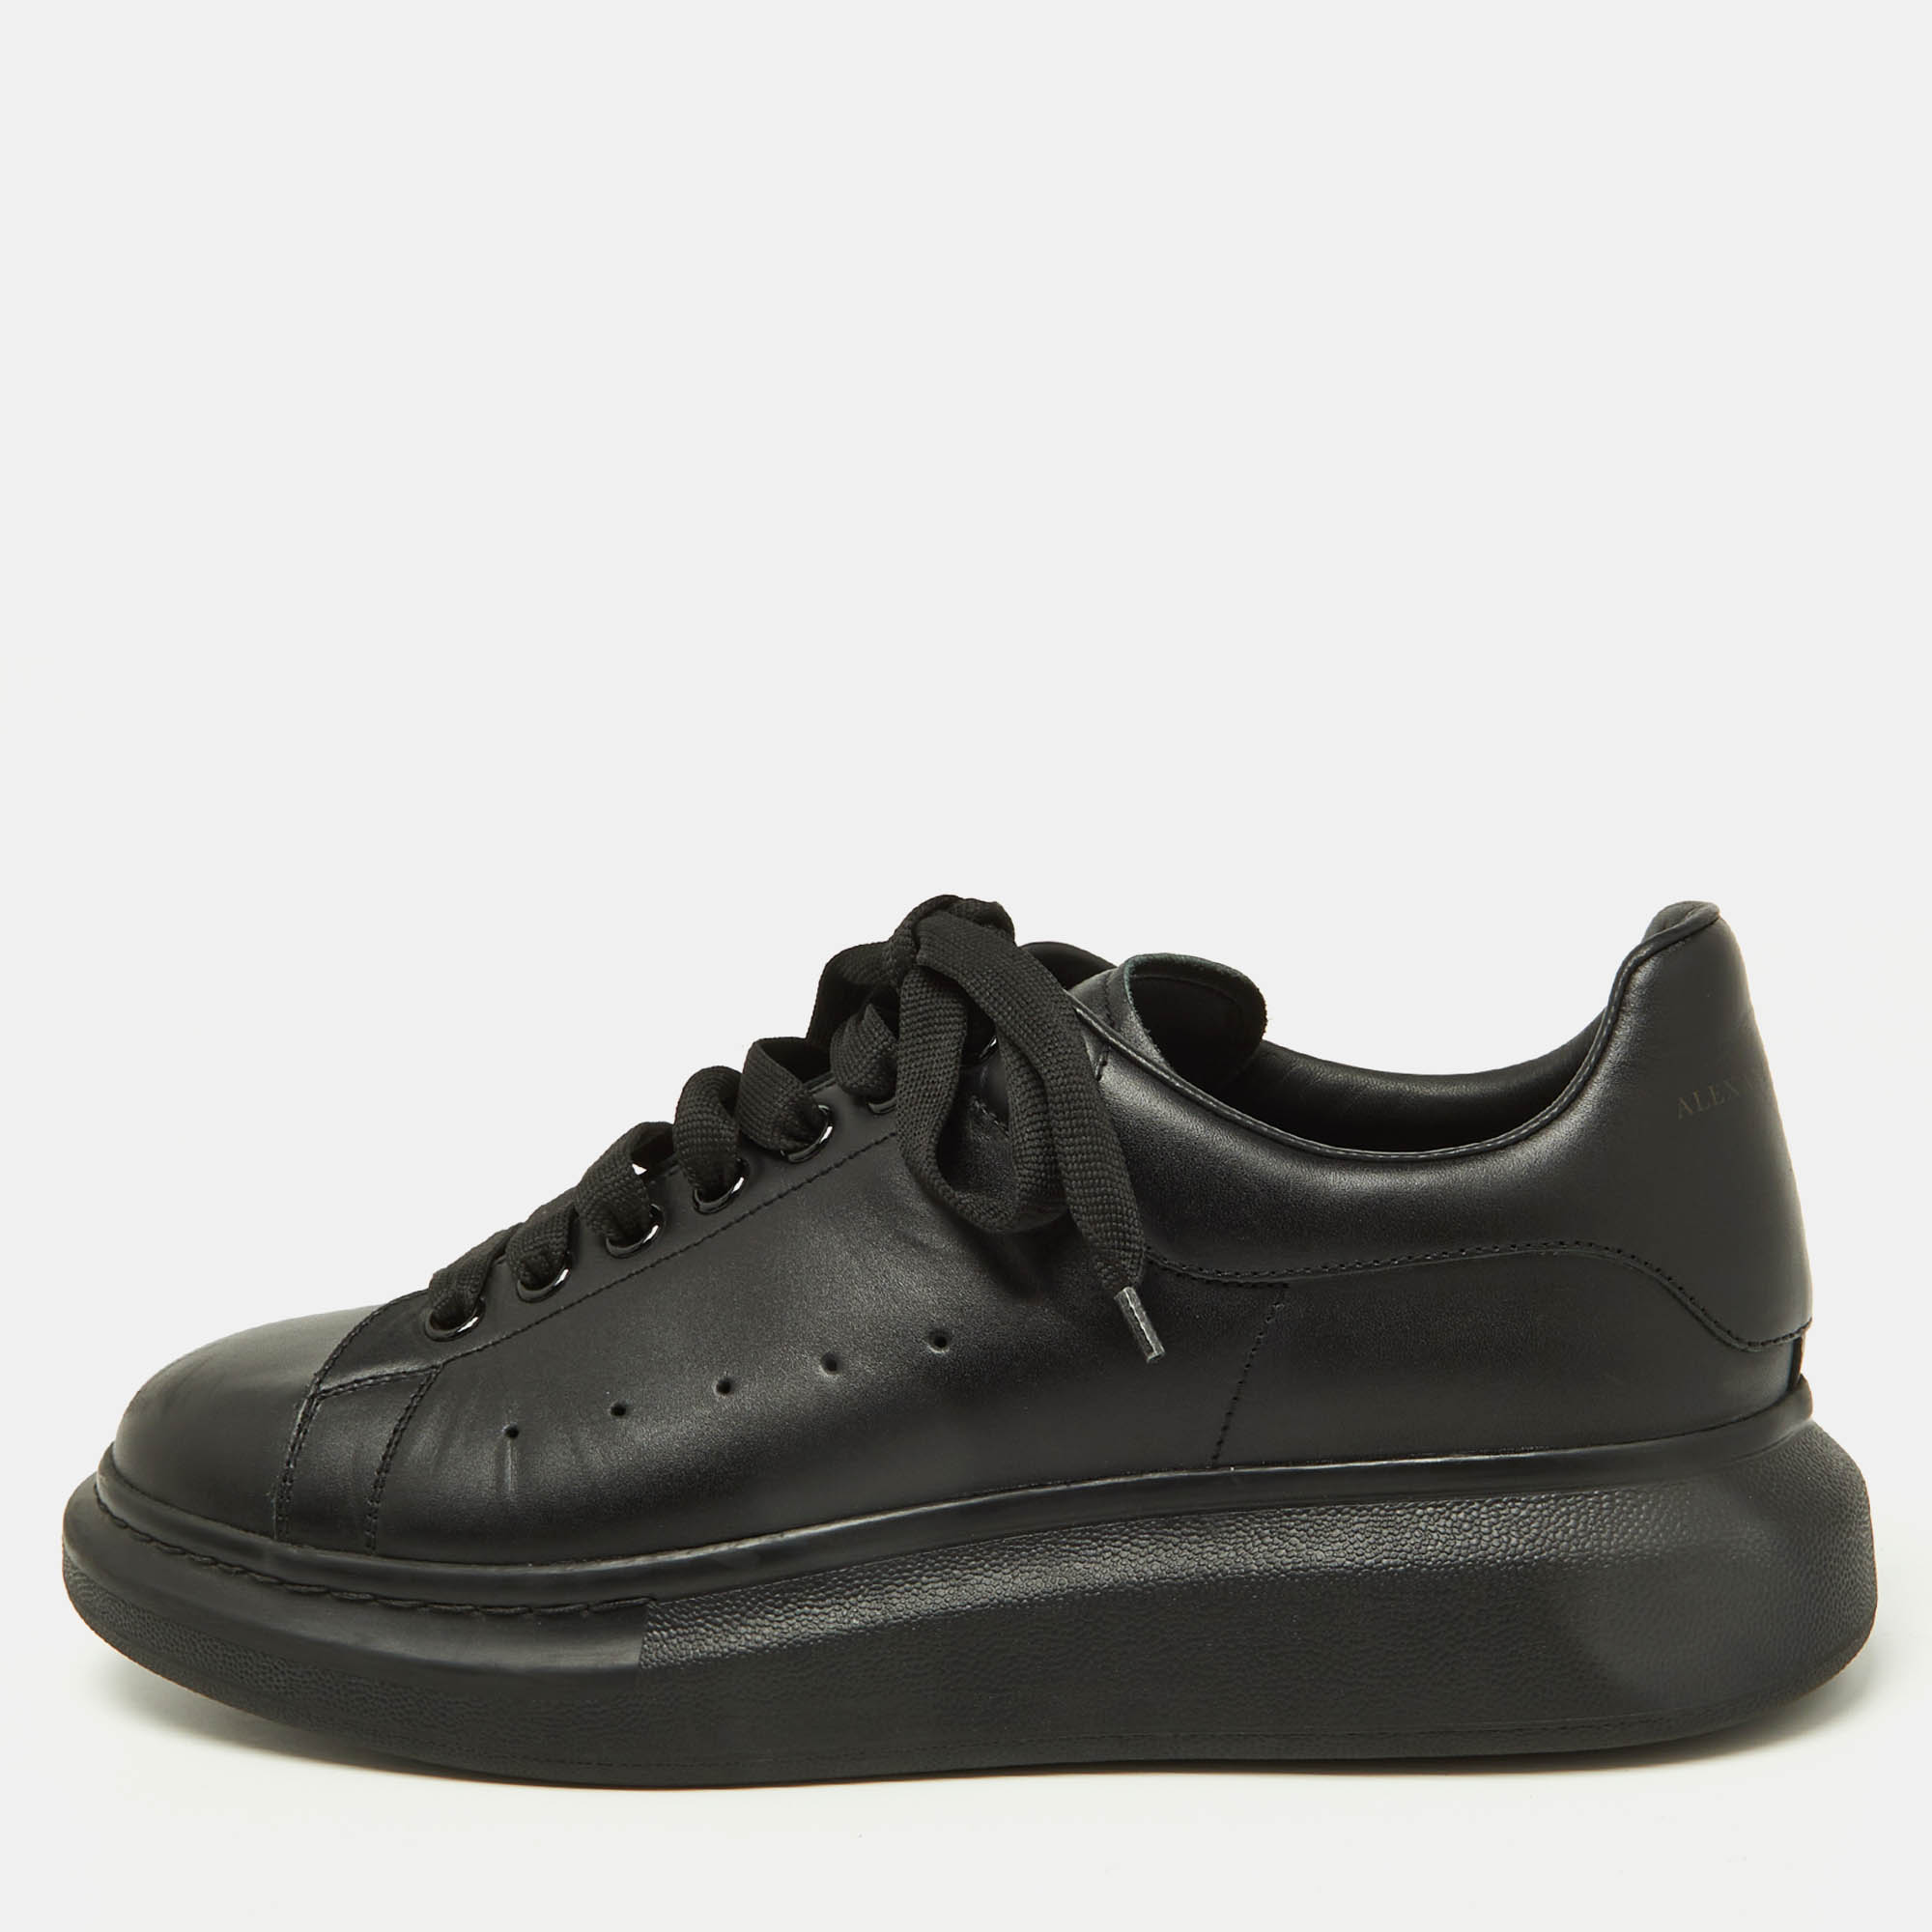 Alexander mcqueen black leather oversized low top sneakers size 44.5